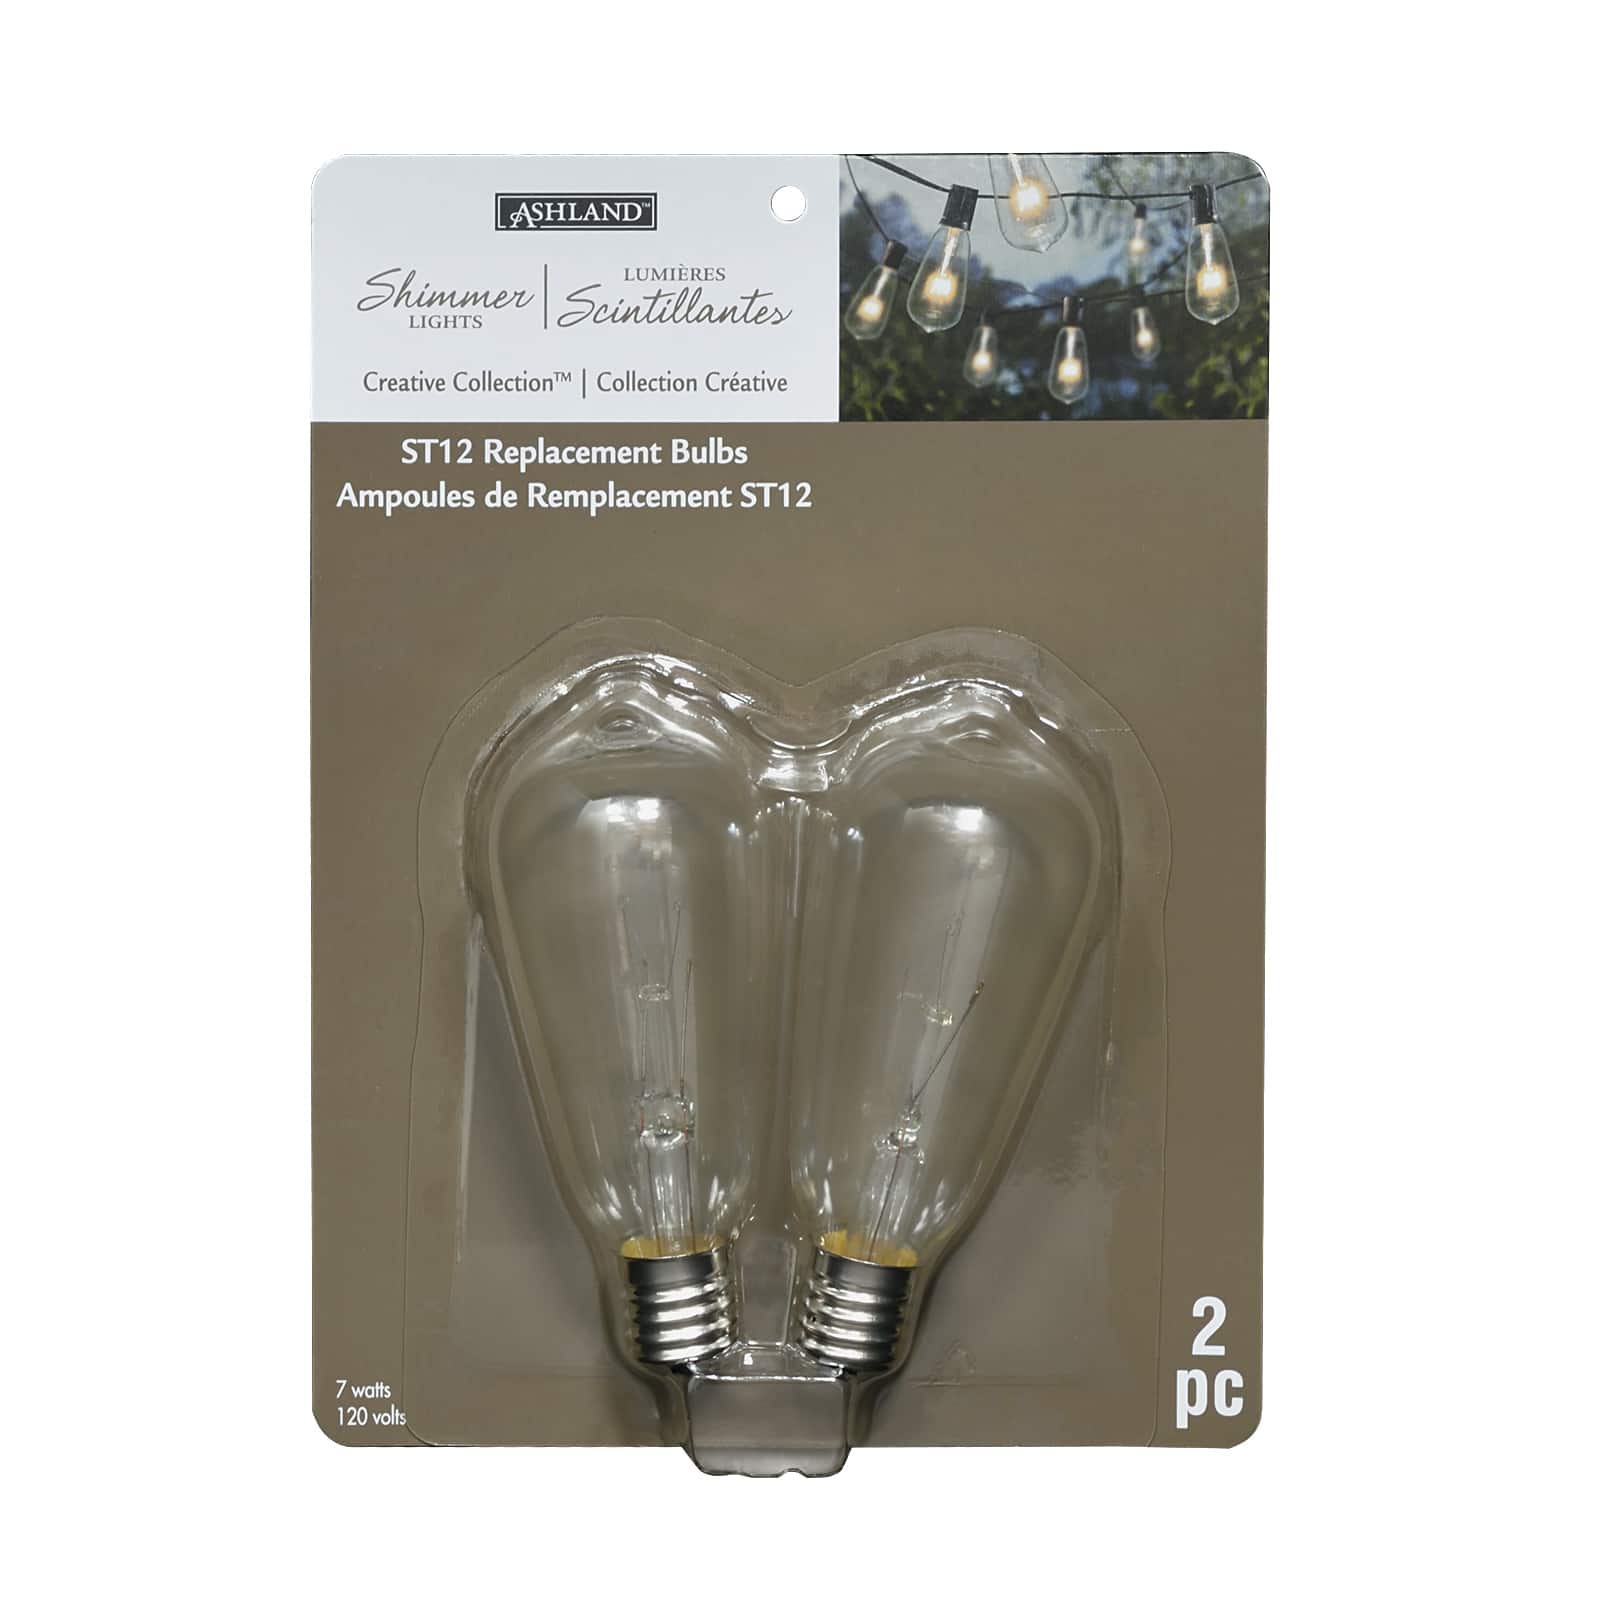 ashland shimmer lights creative collection